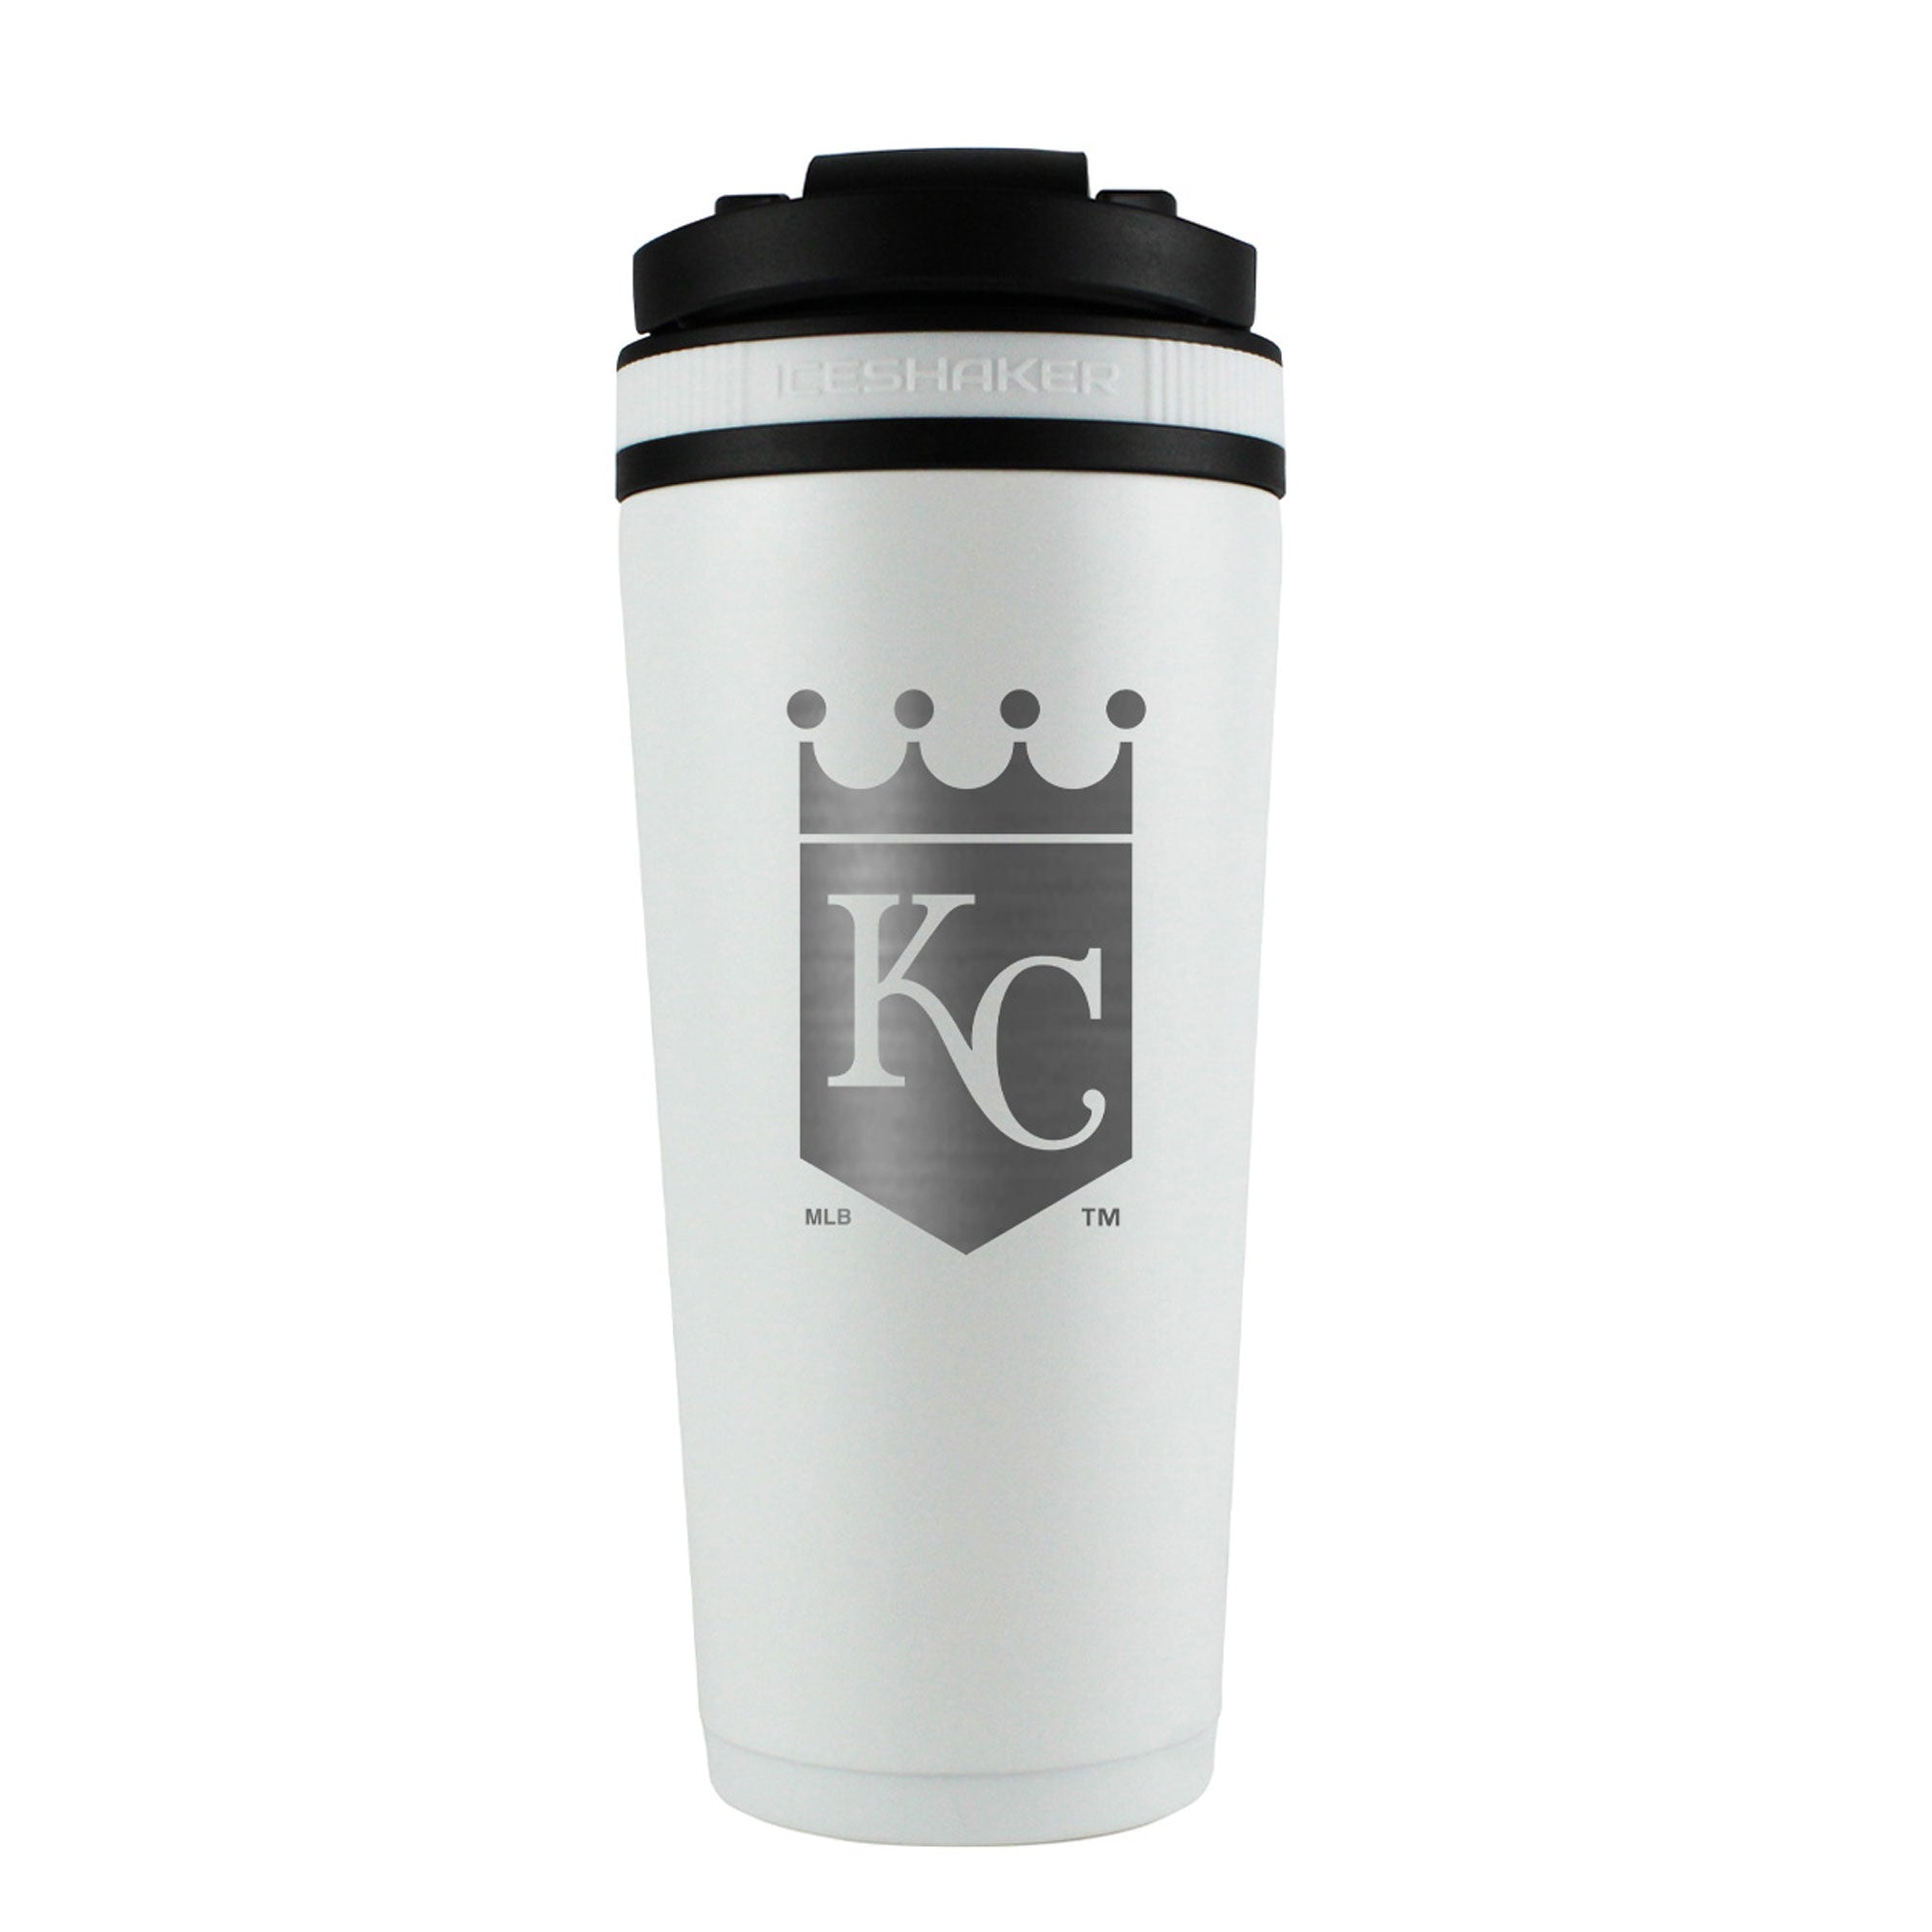 Officially Licensed Kansas City Royals 26oz Ice Shaker - White